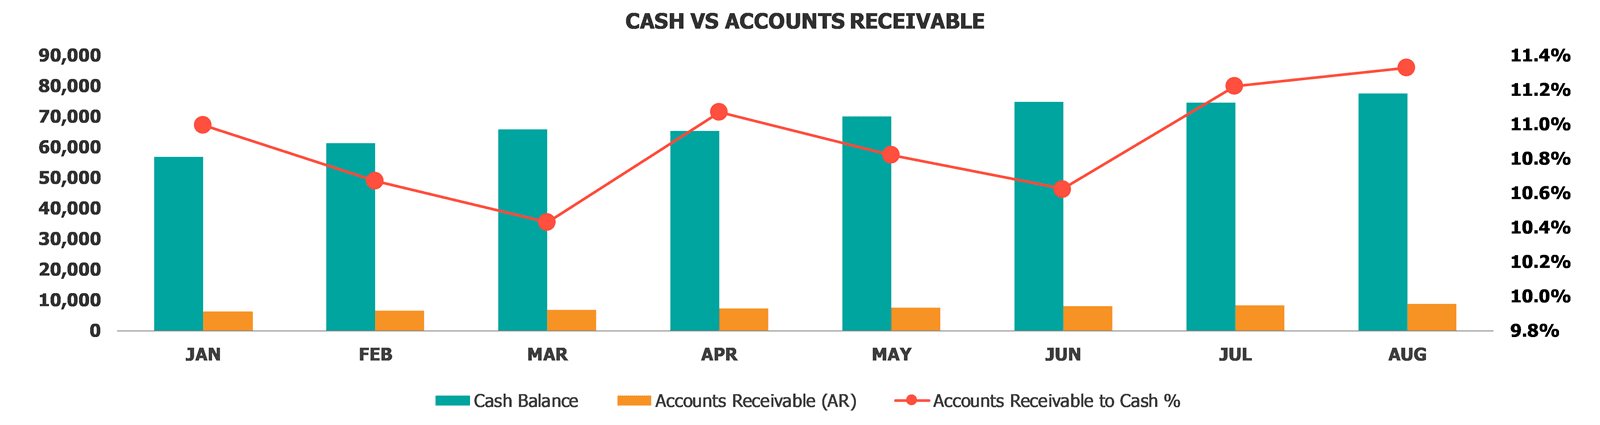 Accounts Receivable Dashboard Excel Template Cash Vs Accounts Receivable